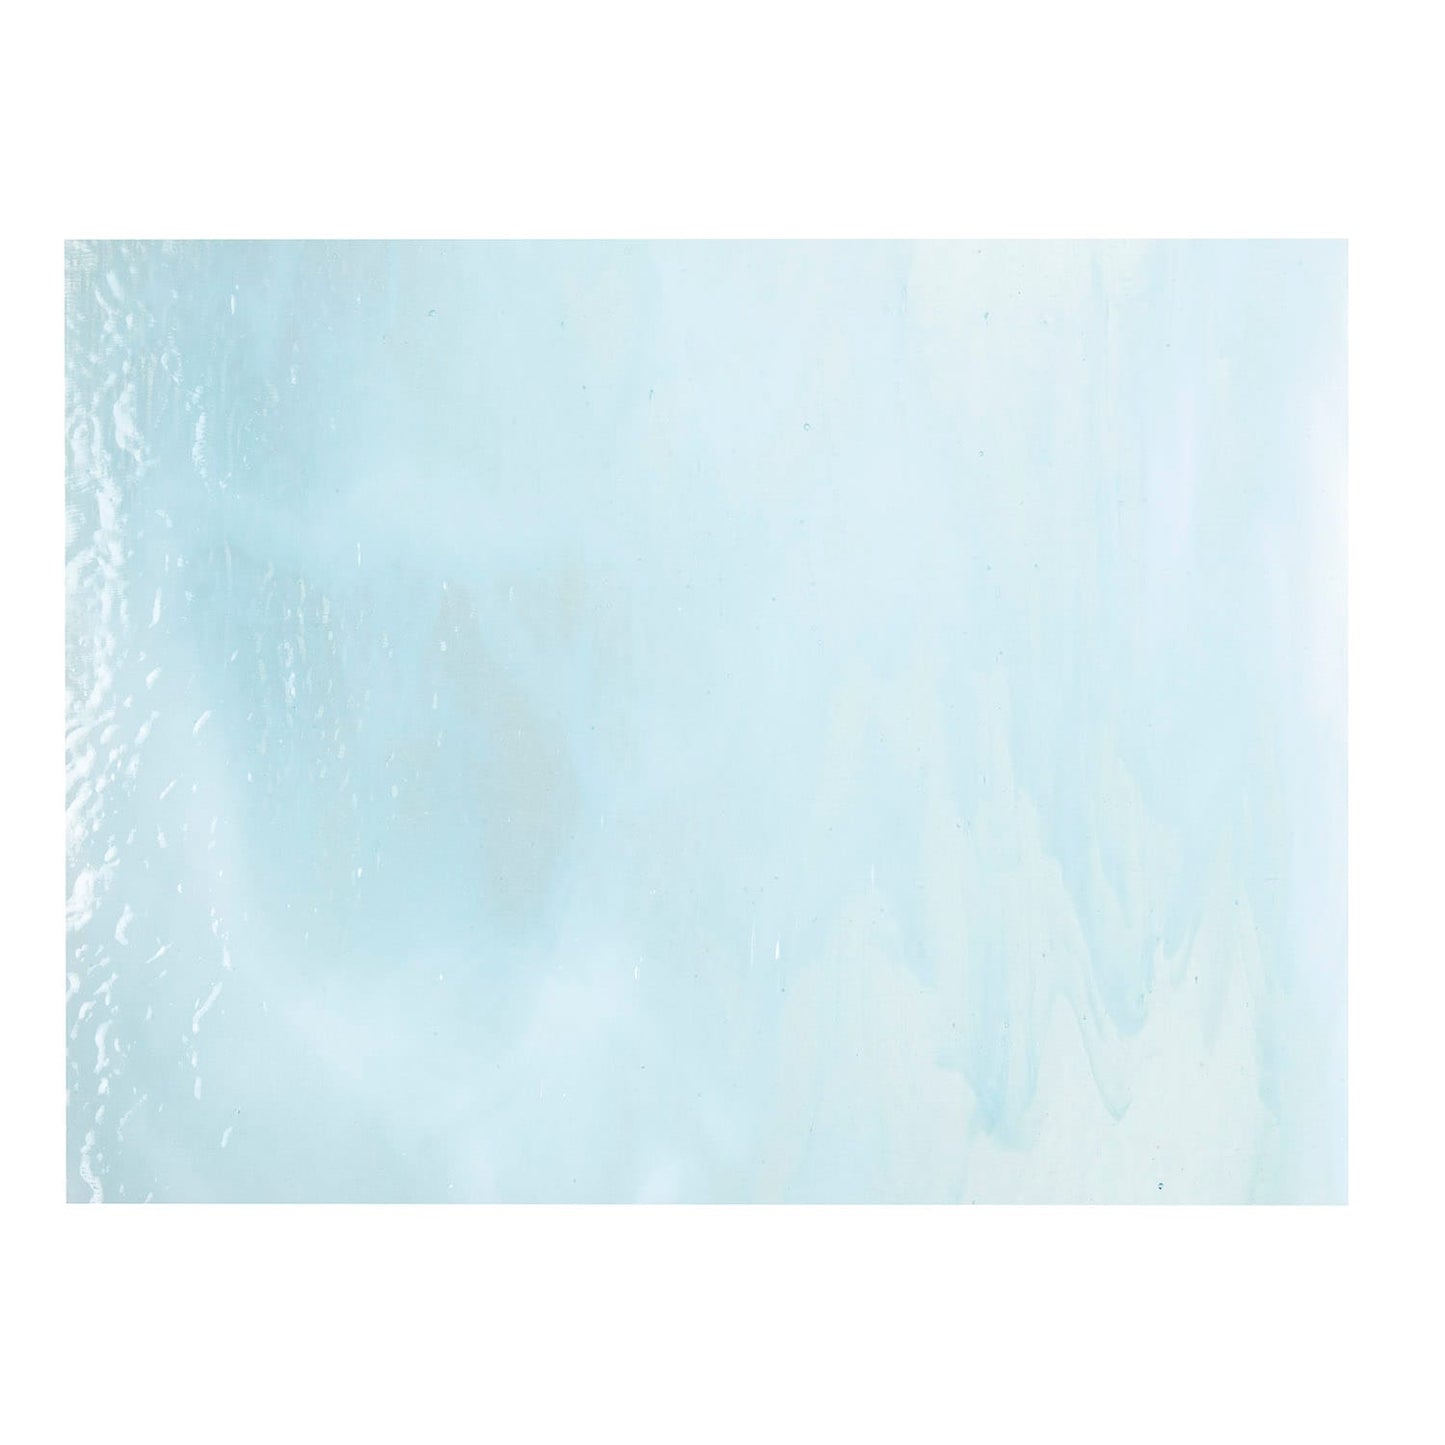 Bullseye COE90 Fusing Glass 002218 Aqua Blue Tint, White Half Sheet